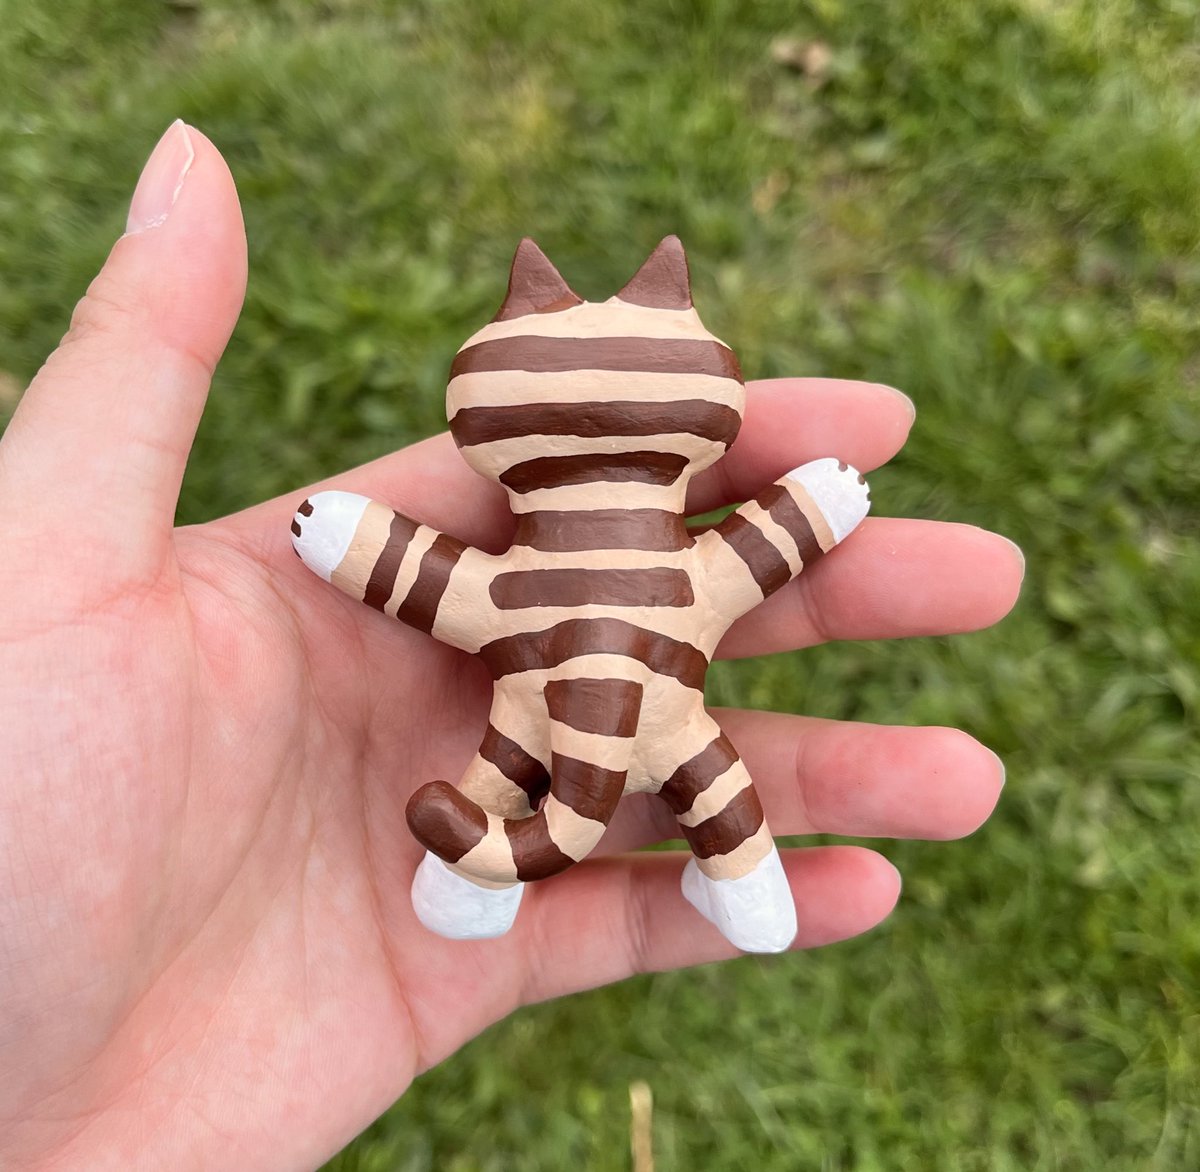 Little cat figurine I made